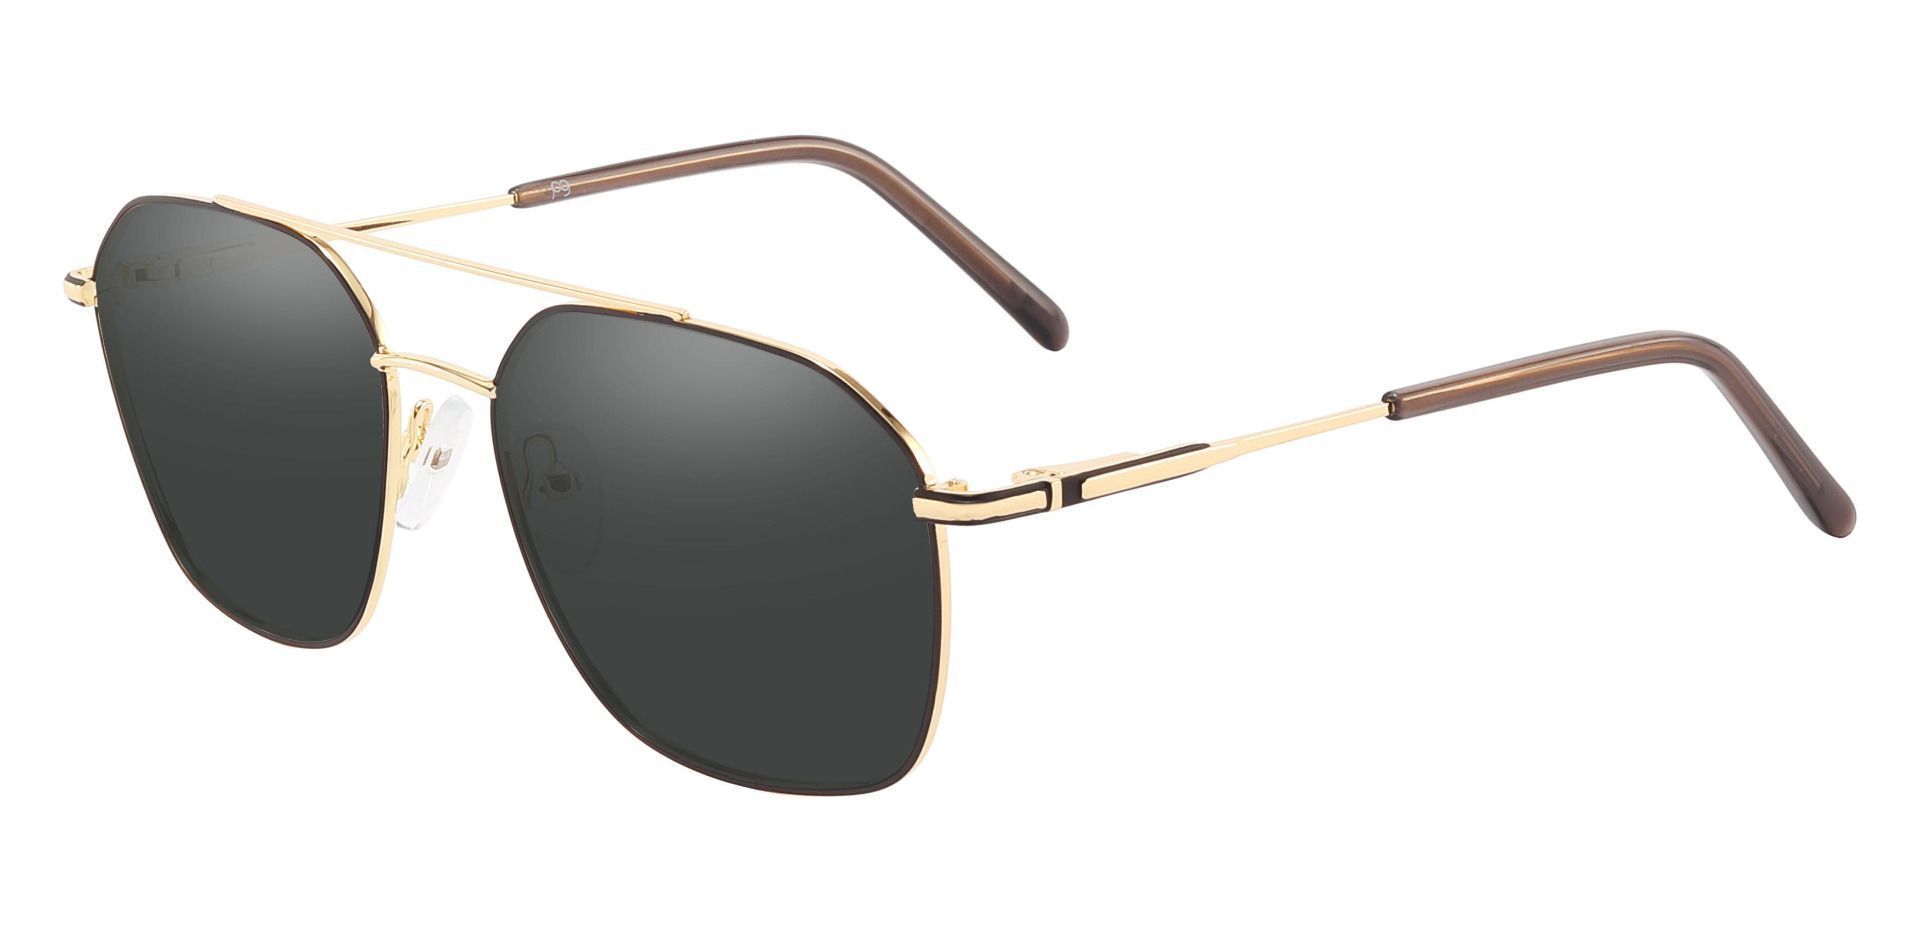 Harvey Aviator Prescription Sunglasses - Gold Frame With Gray Lenses